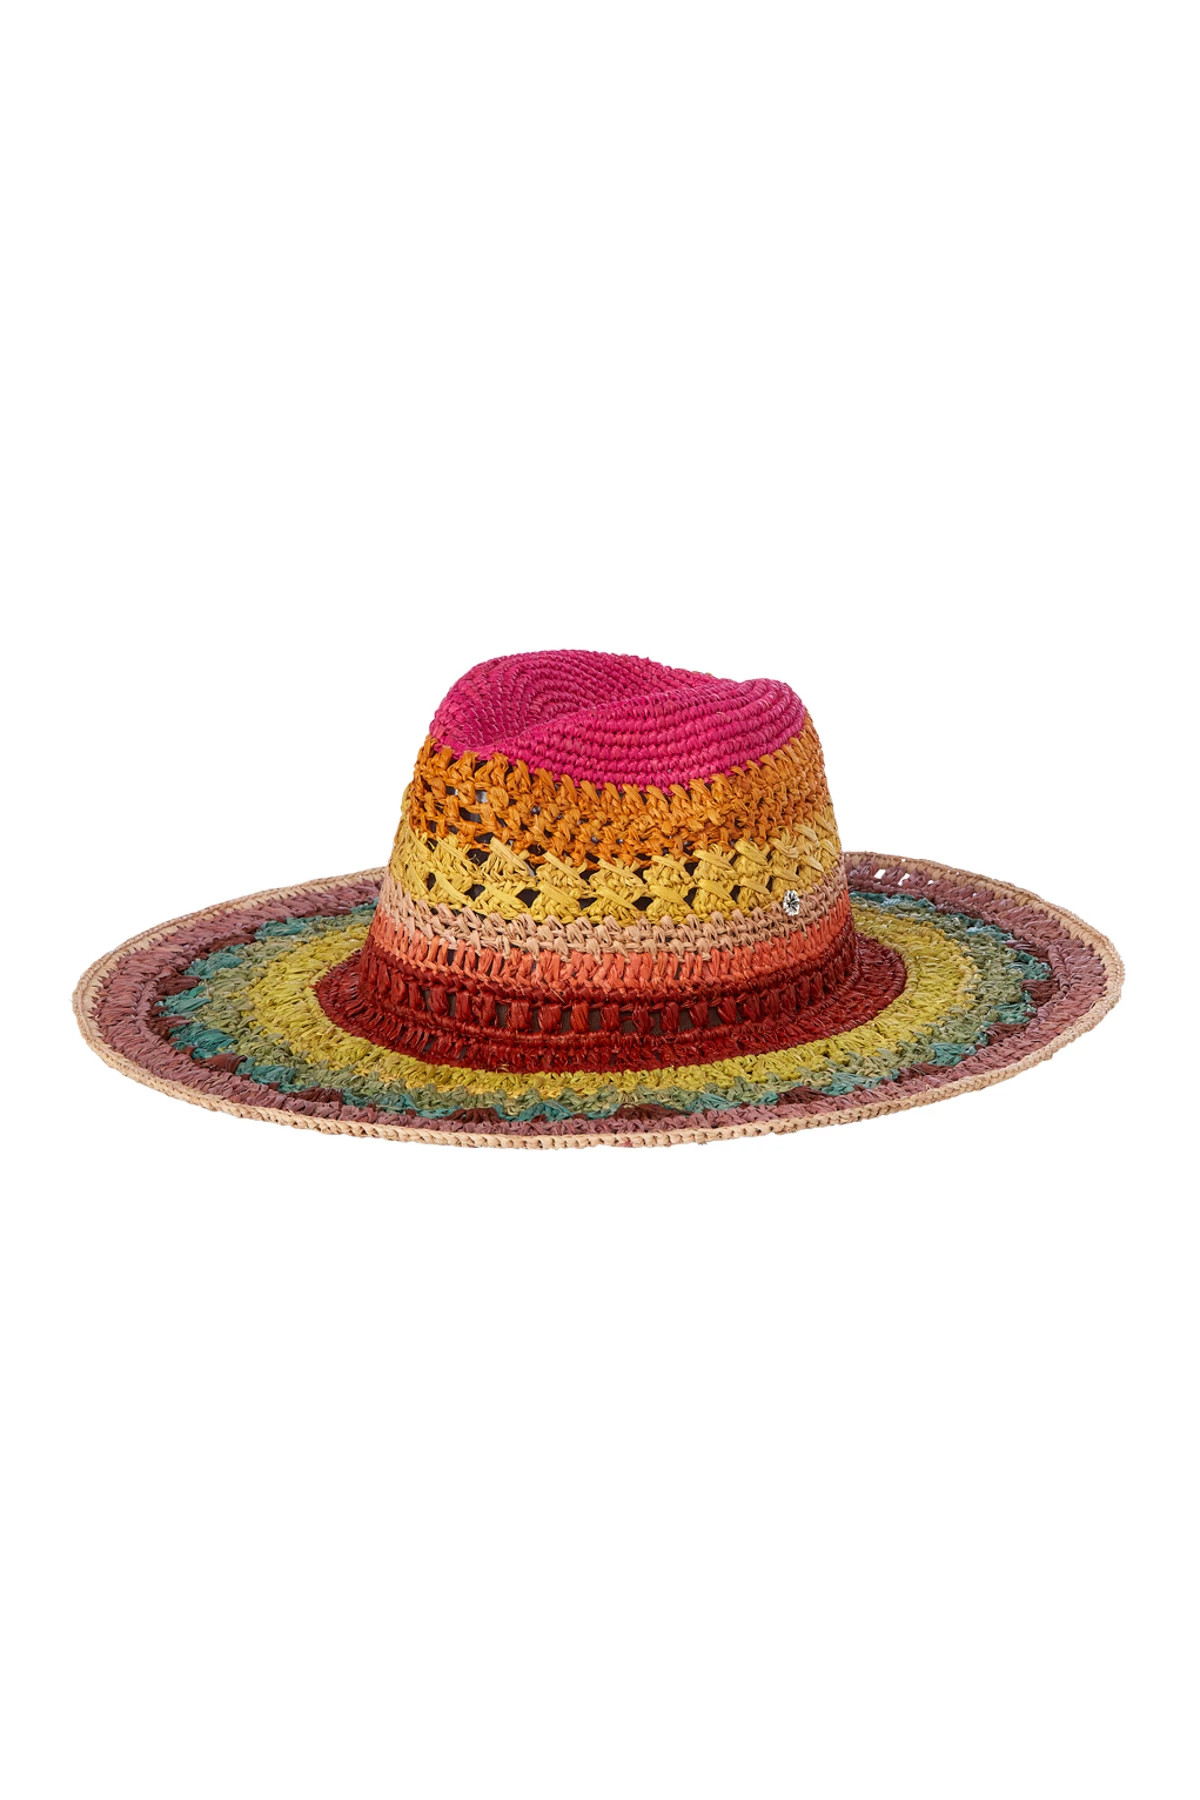 BRIGHT MULTI Arlet Panama Hat image number 2